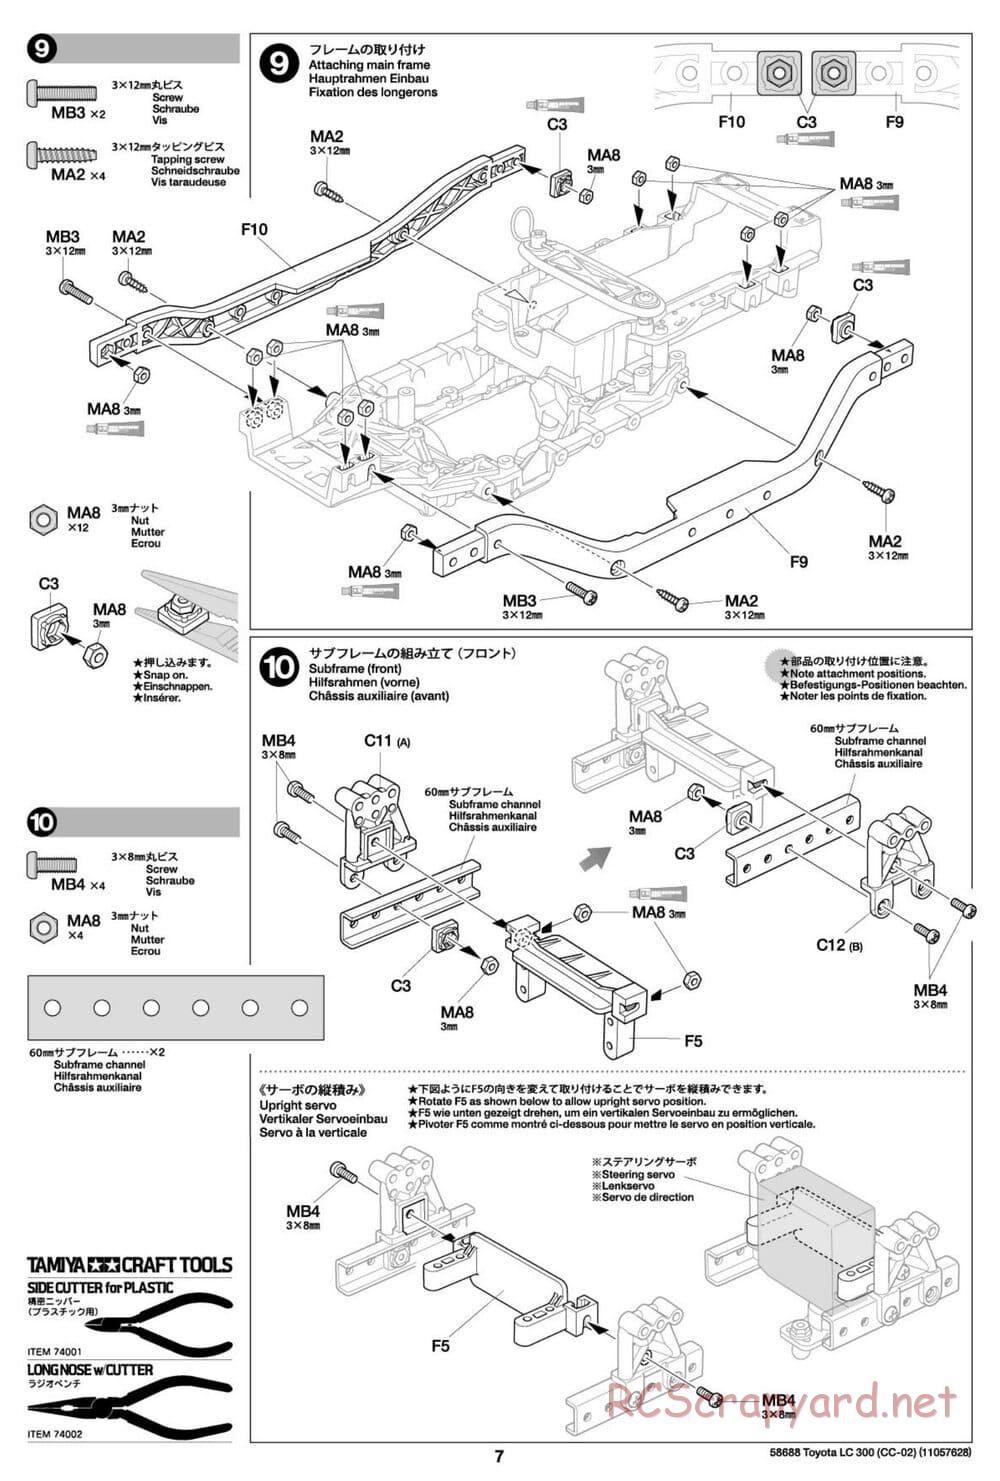 Tamiya - Toyota Land Cruiser 300 - CC-02 Chassis - Manual - Page 7